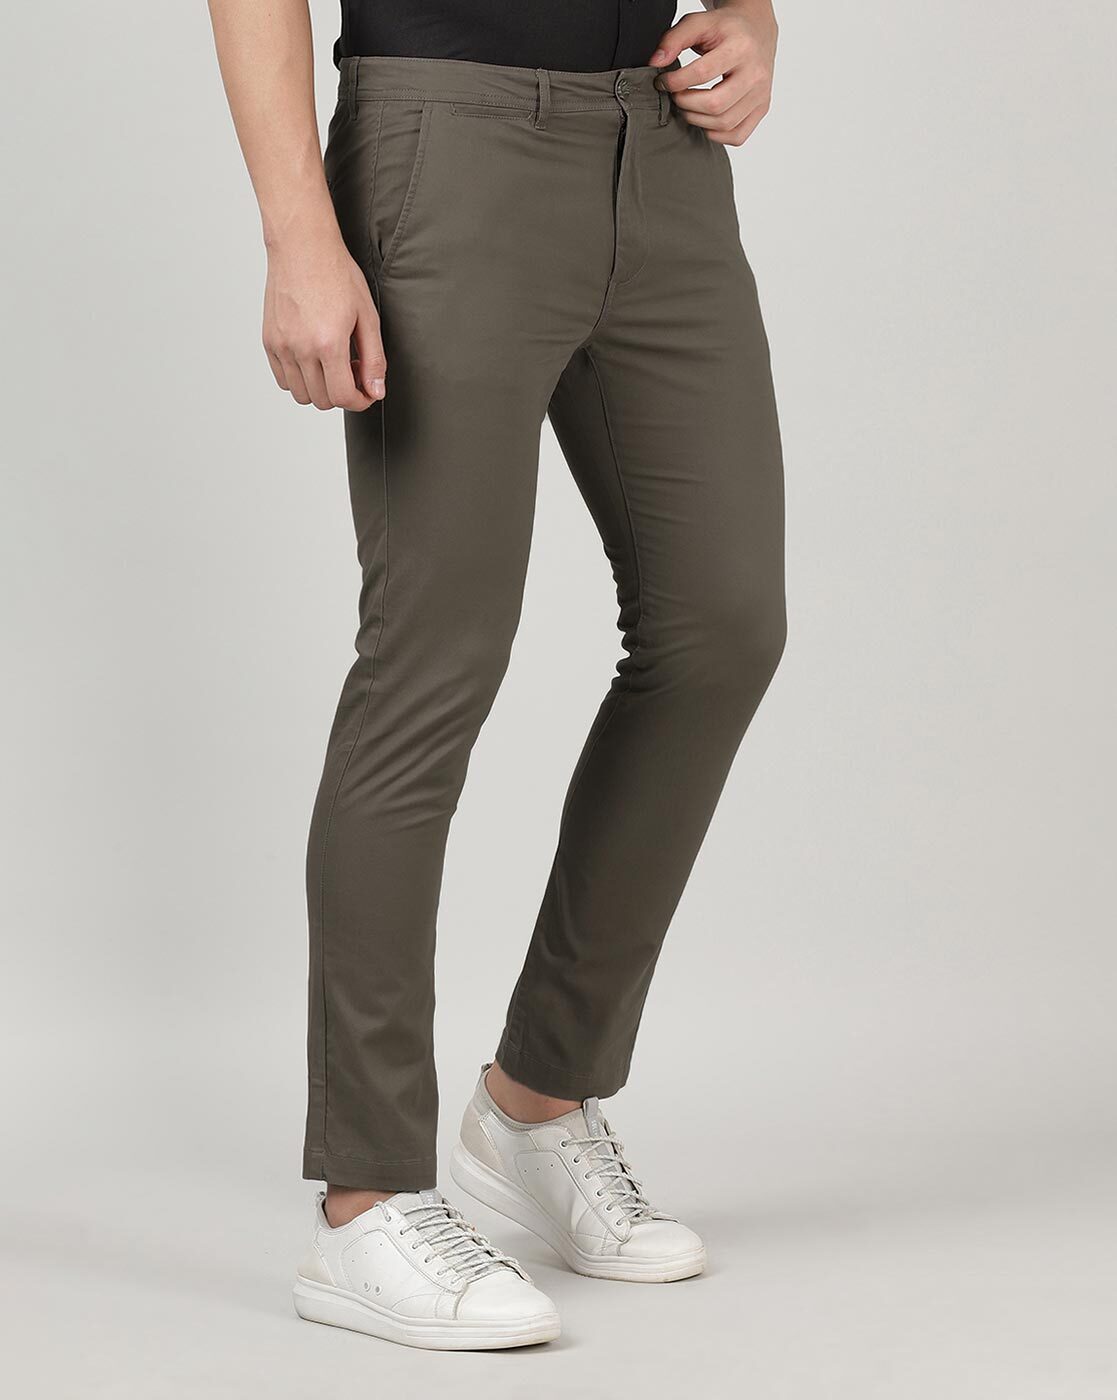 Buy Grey Trousers & Pants for Men by Merchant Marine Online